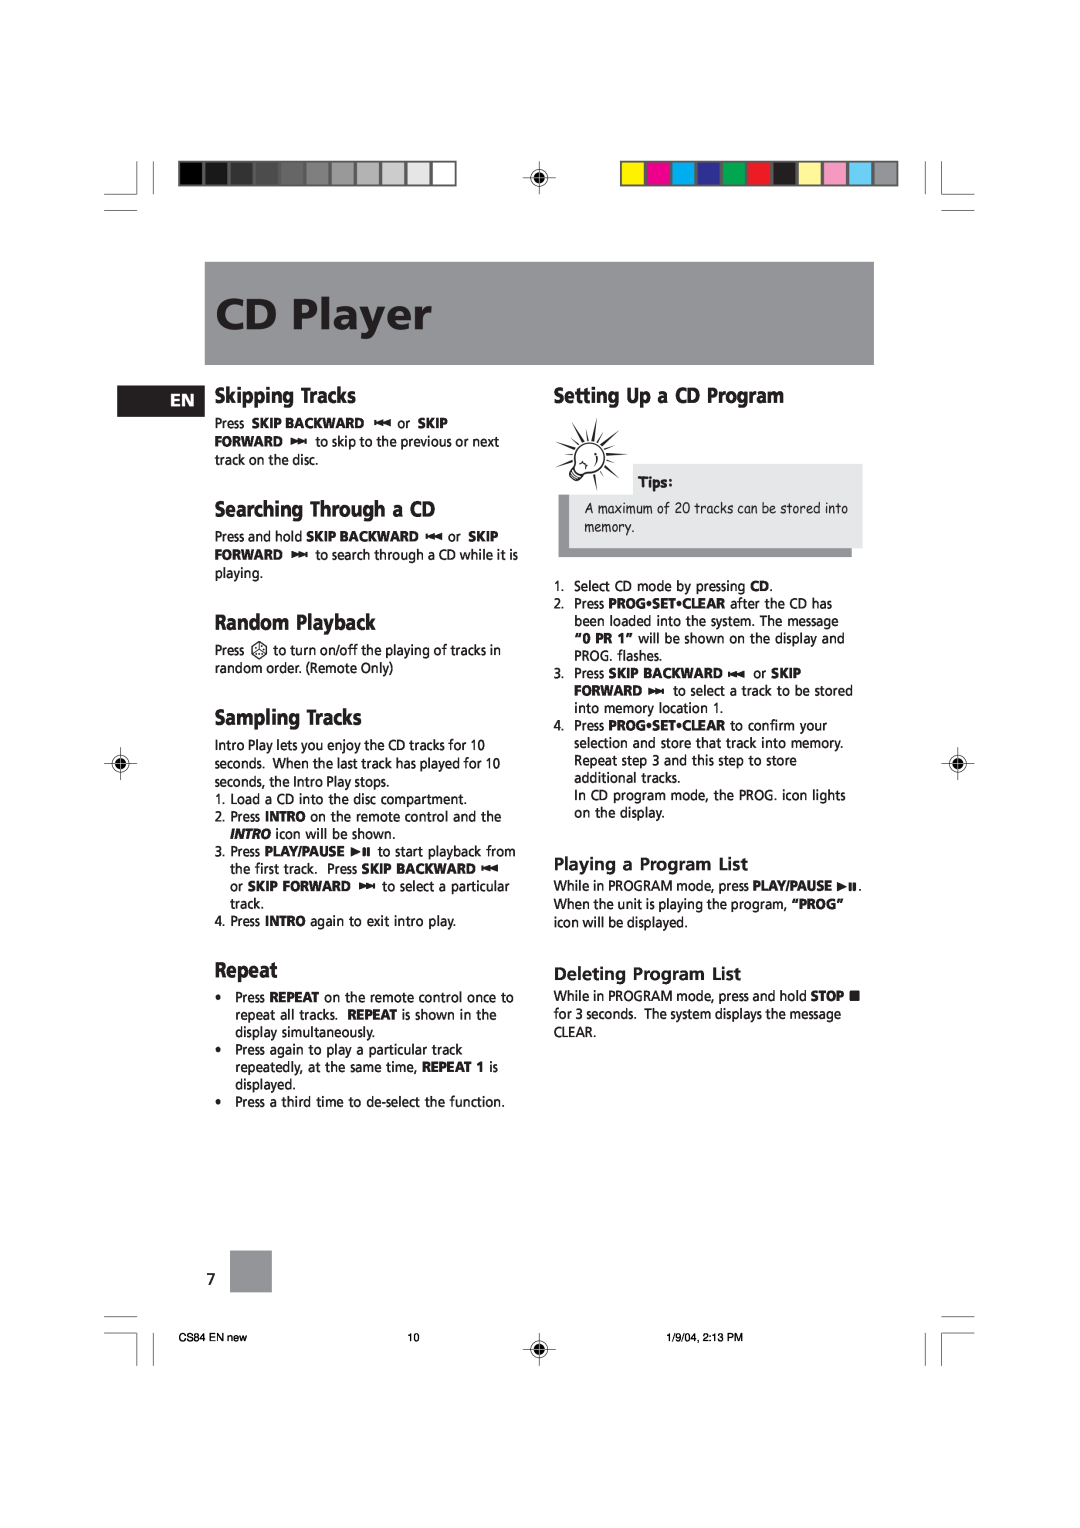 Technicolor - Thomson CS84 Skipping Tracks, Searching Through a CD, Random Playback, Sampling Tracks, Repeat, CD Player 